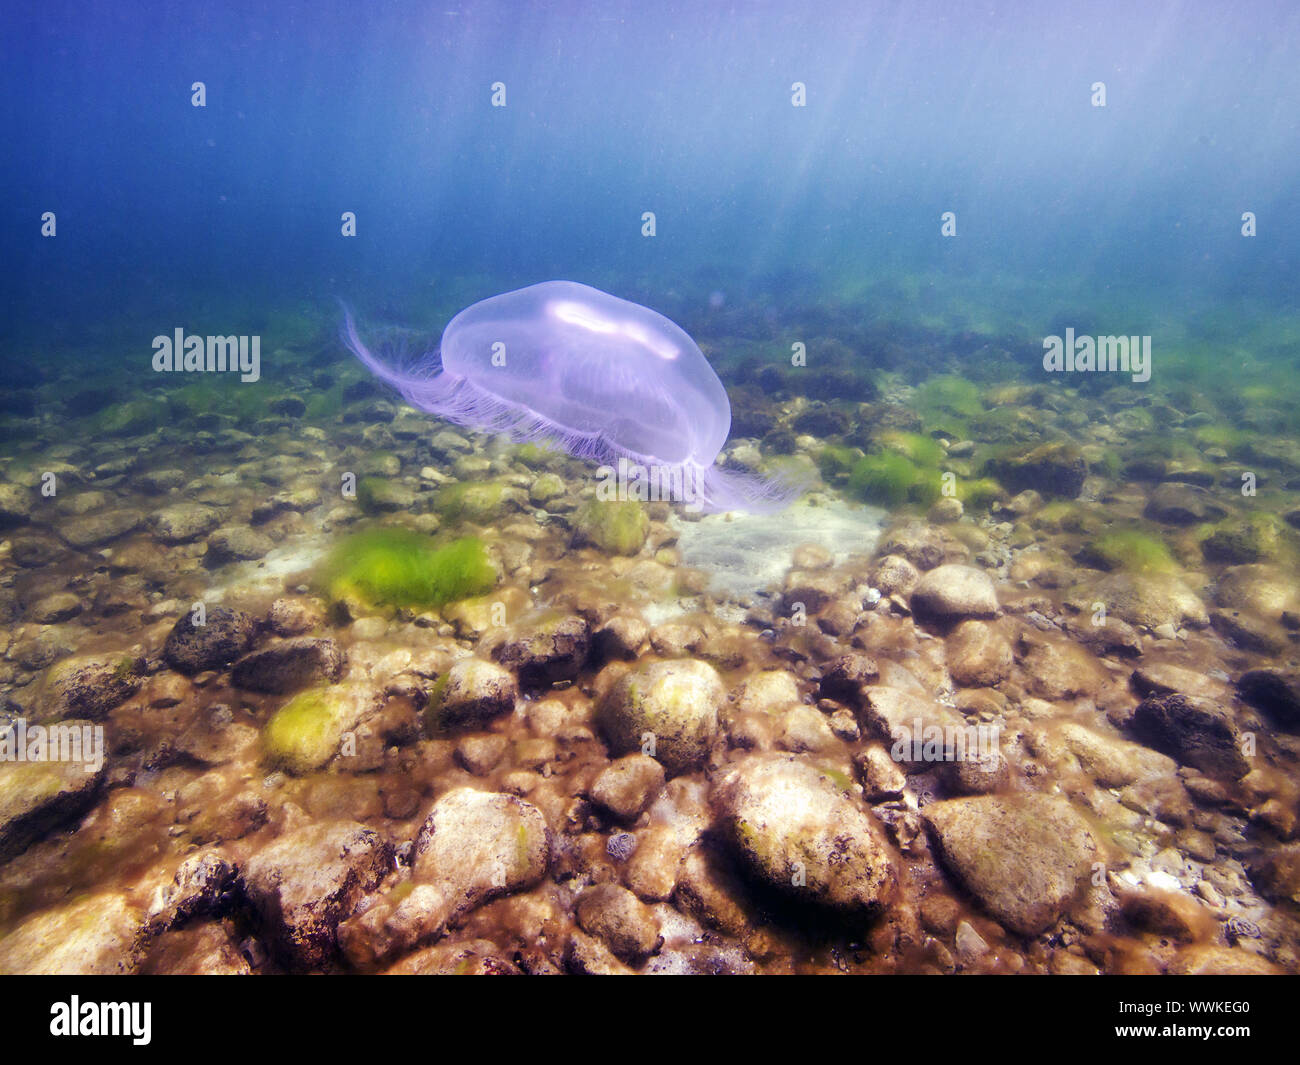 common jellyfish (Aurelia aurita) Stock Photo